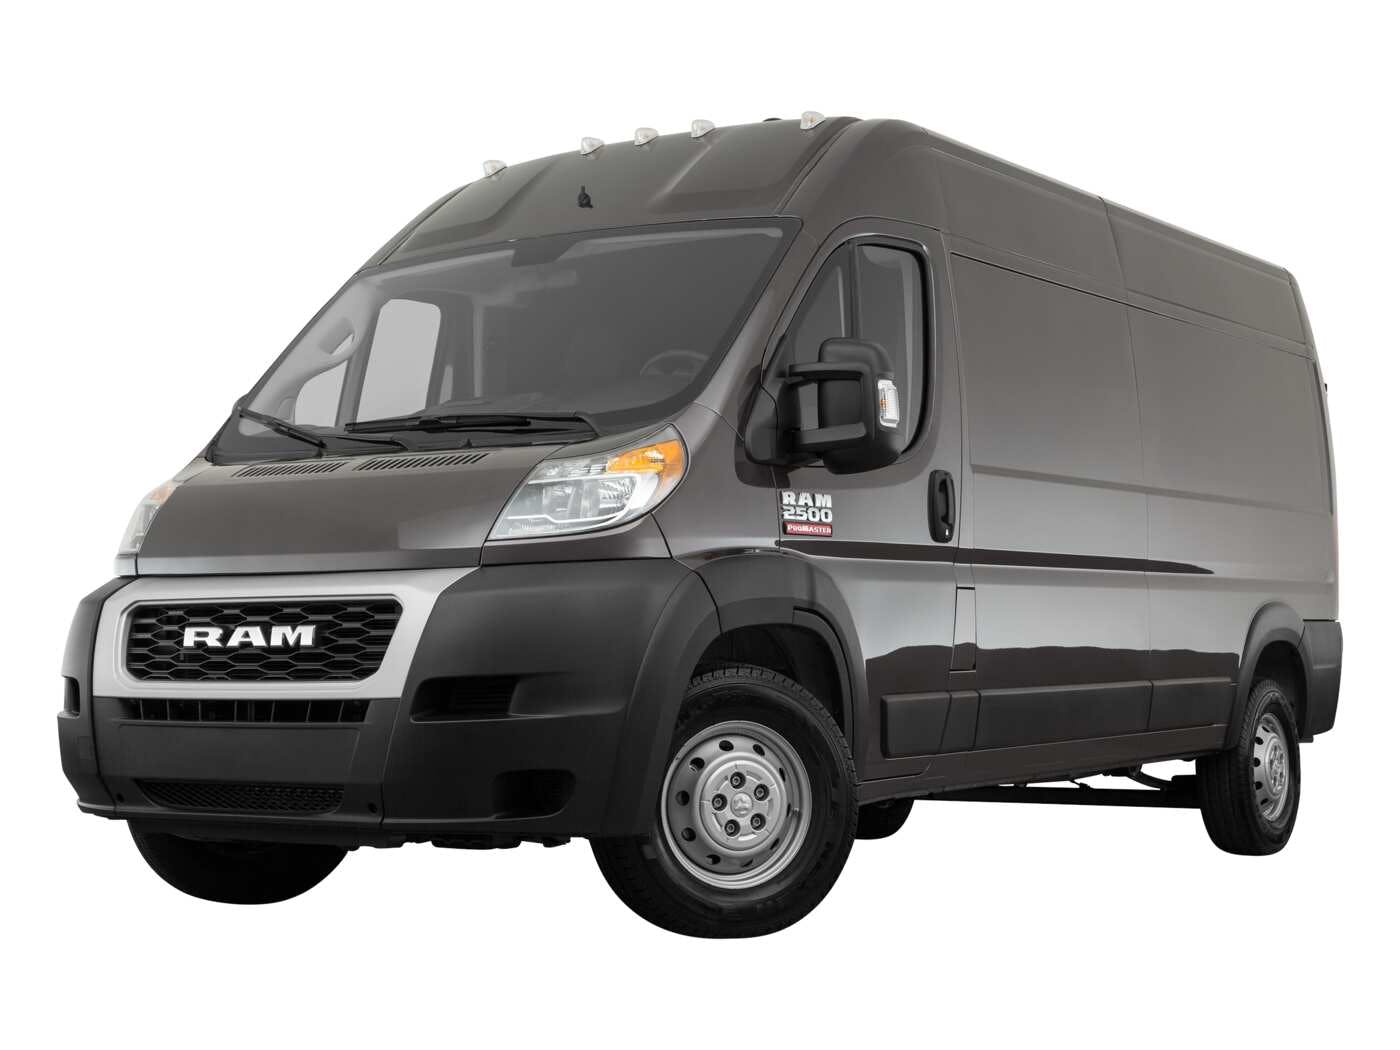 2019 Ram ProMaster Cargo Van Review | Pricing, Trims & Photos - TrueCar